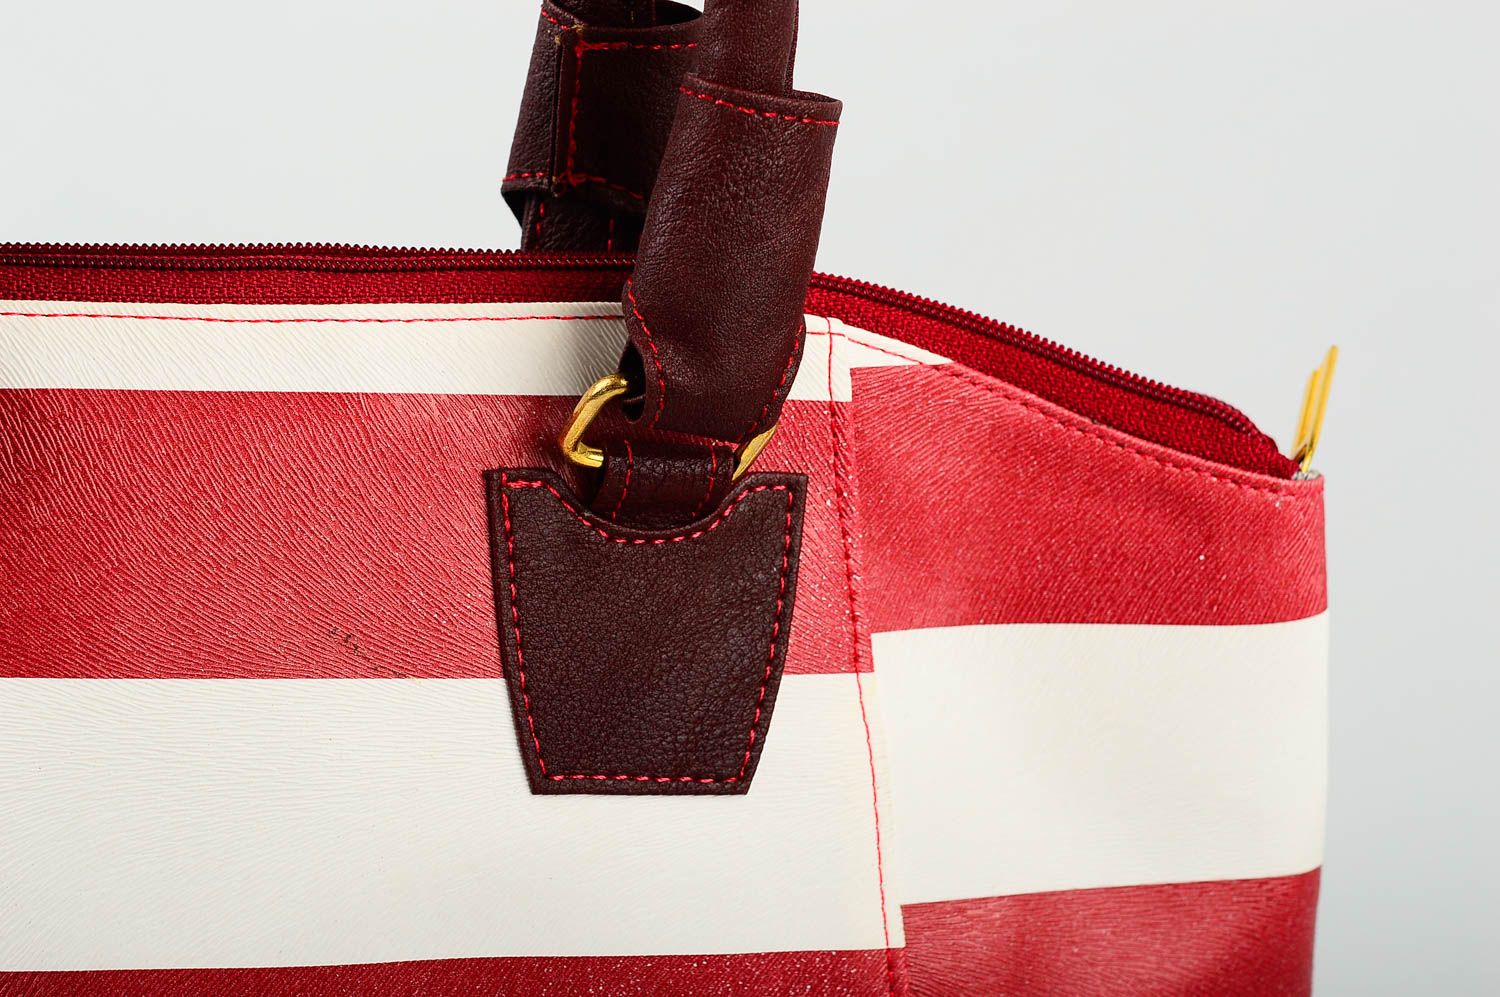 Stylish handmade leather bag leather handbag design fashion trends for girls photo 4